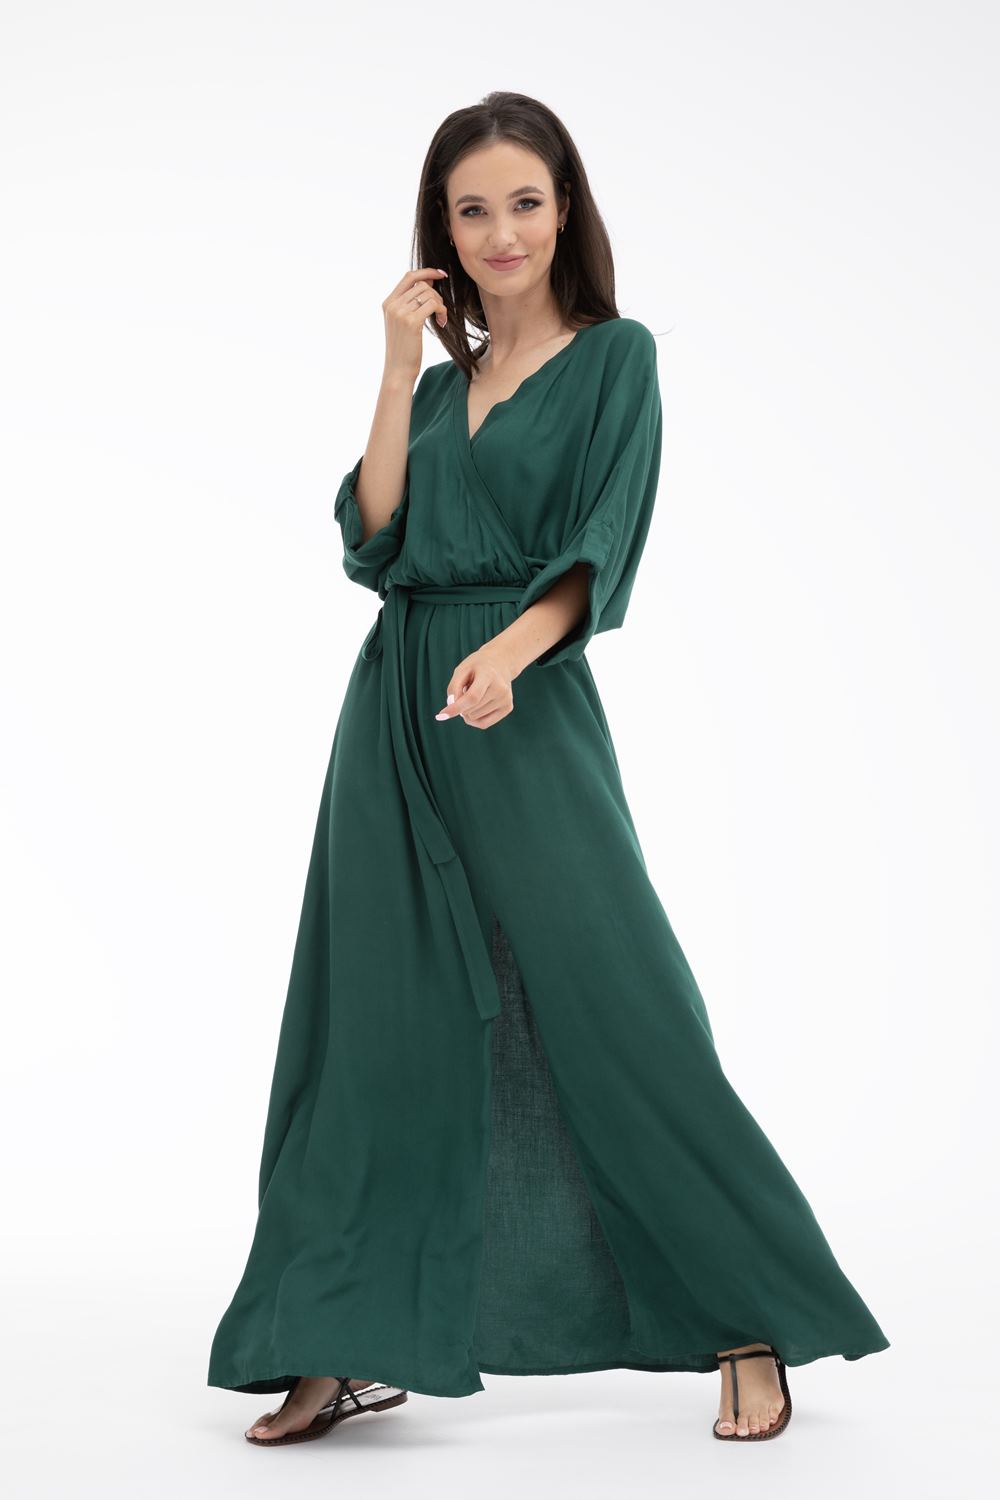 Emerald Dream long dress with binding